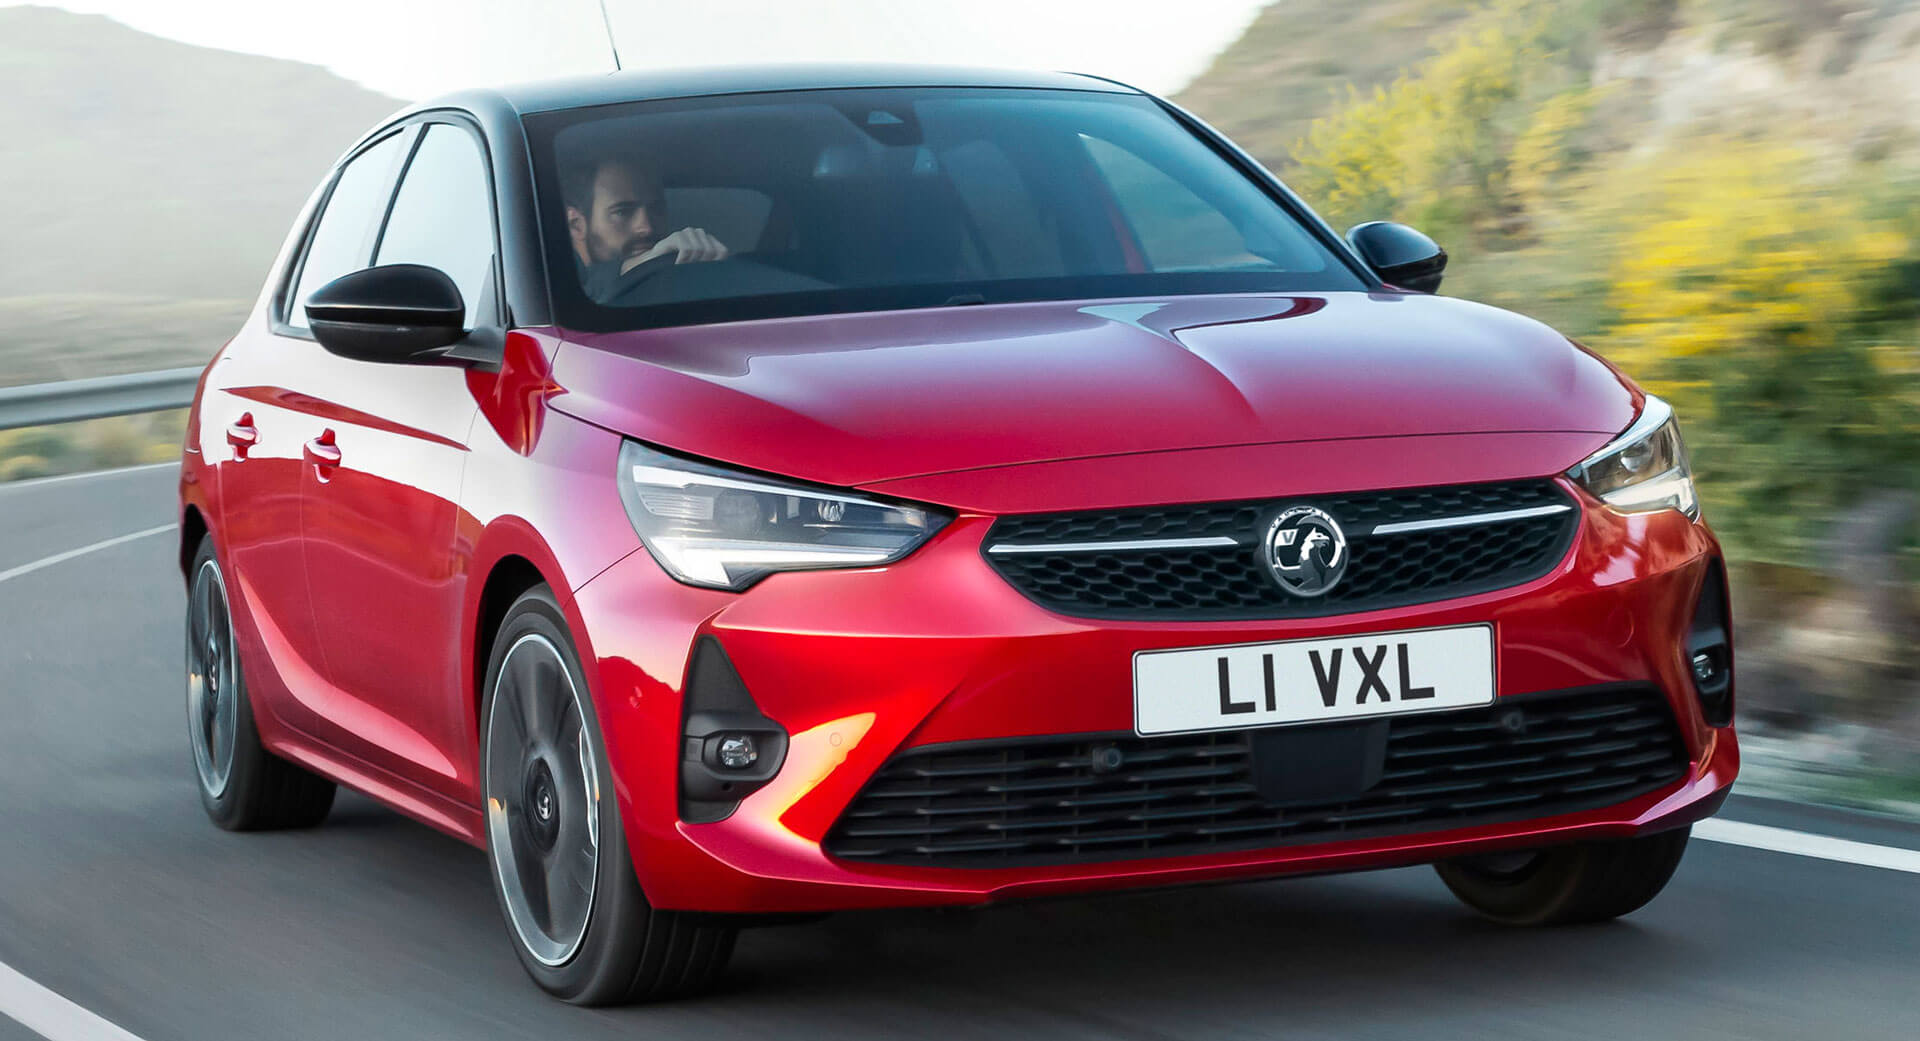 Big-selling Vauxhall Corsa gets a major facelift